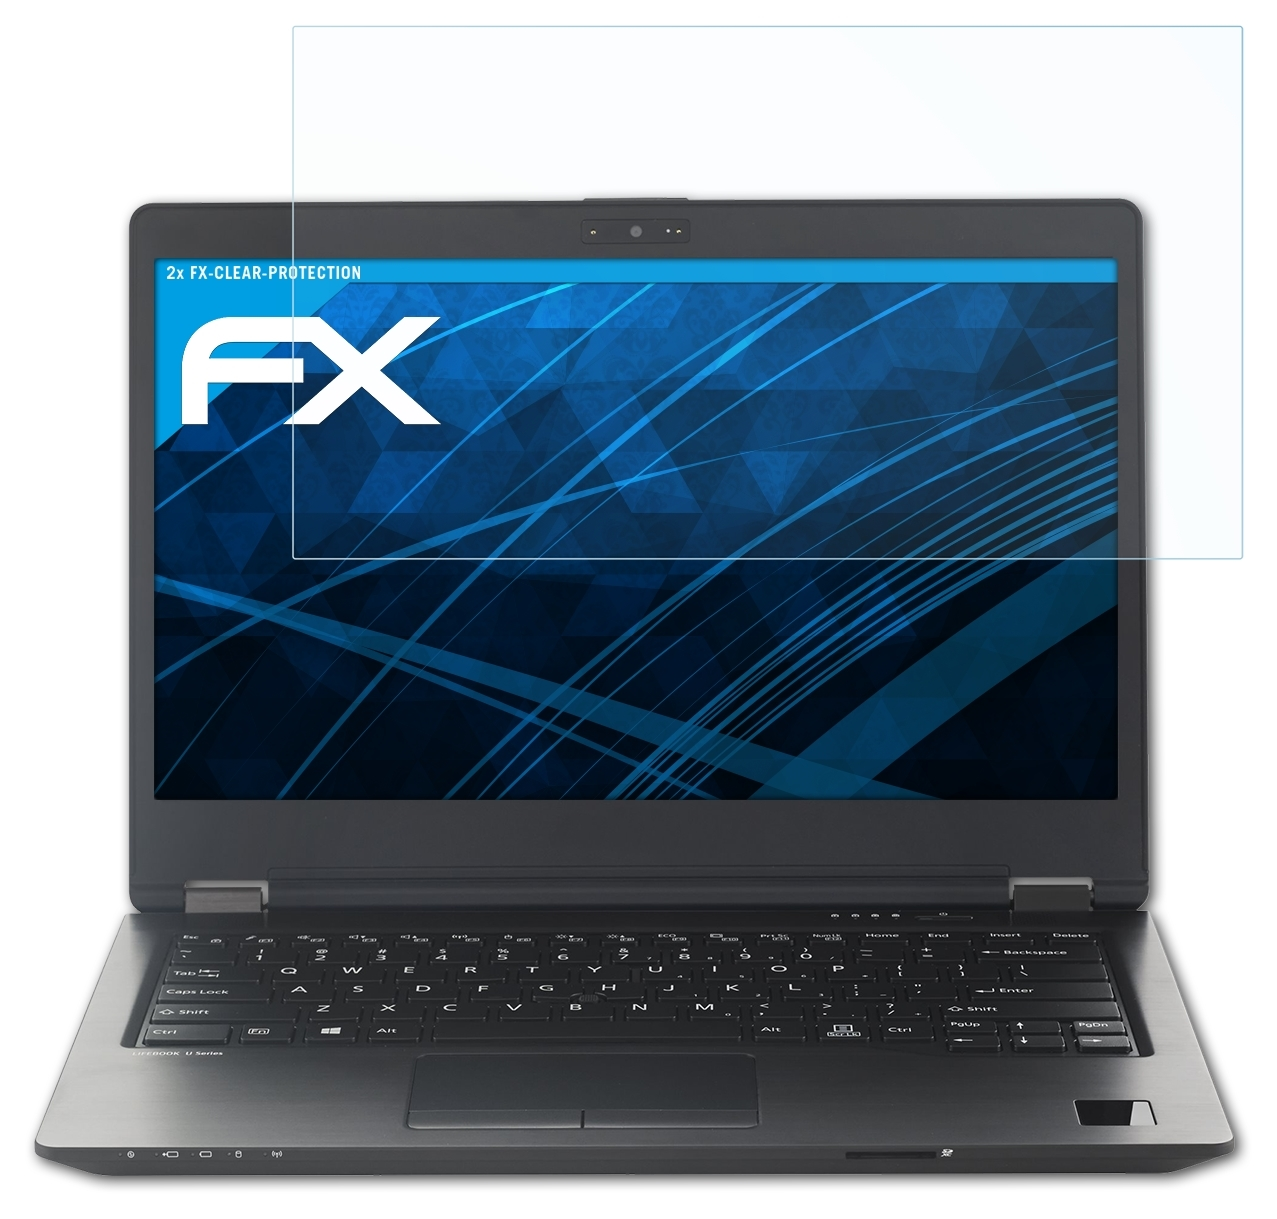 ATFOLIX 2x FX-Clear Fujitsu U748) Lifebook Displayschutz(für